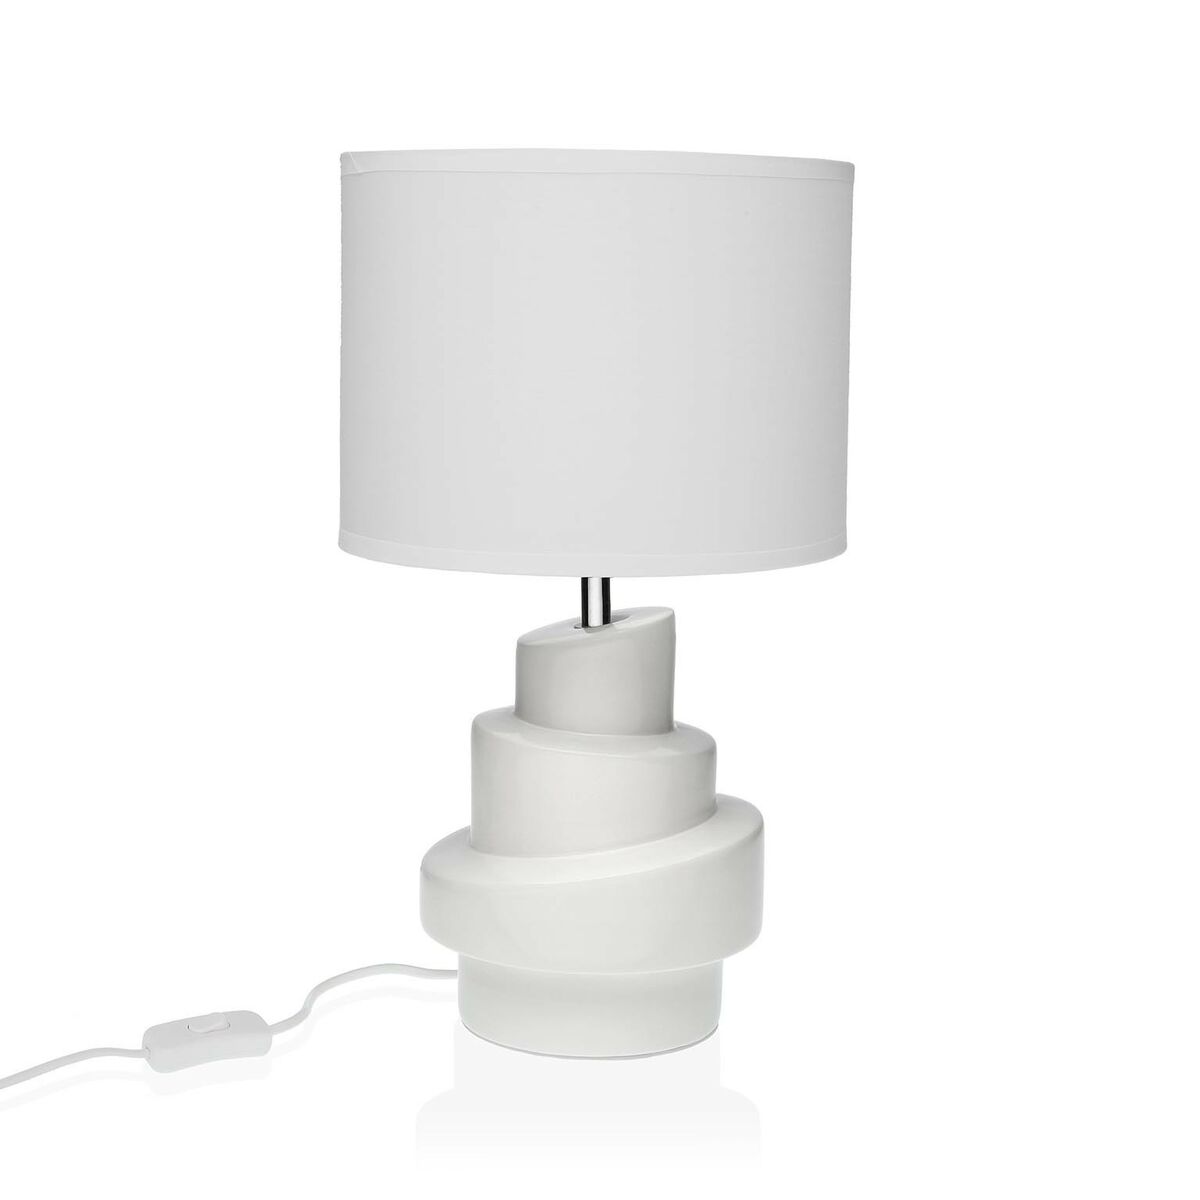 Table lamp white ceramic